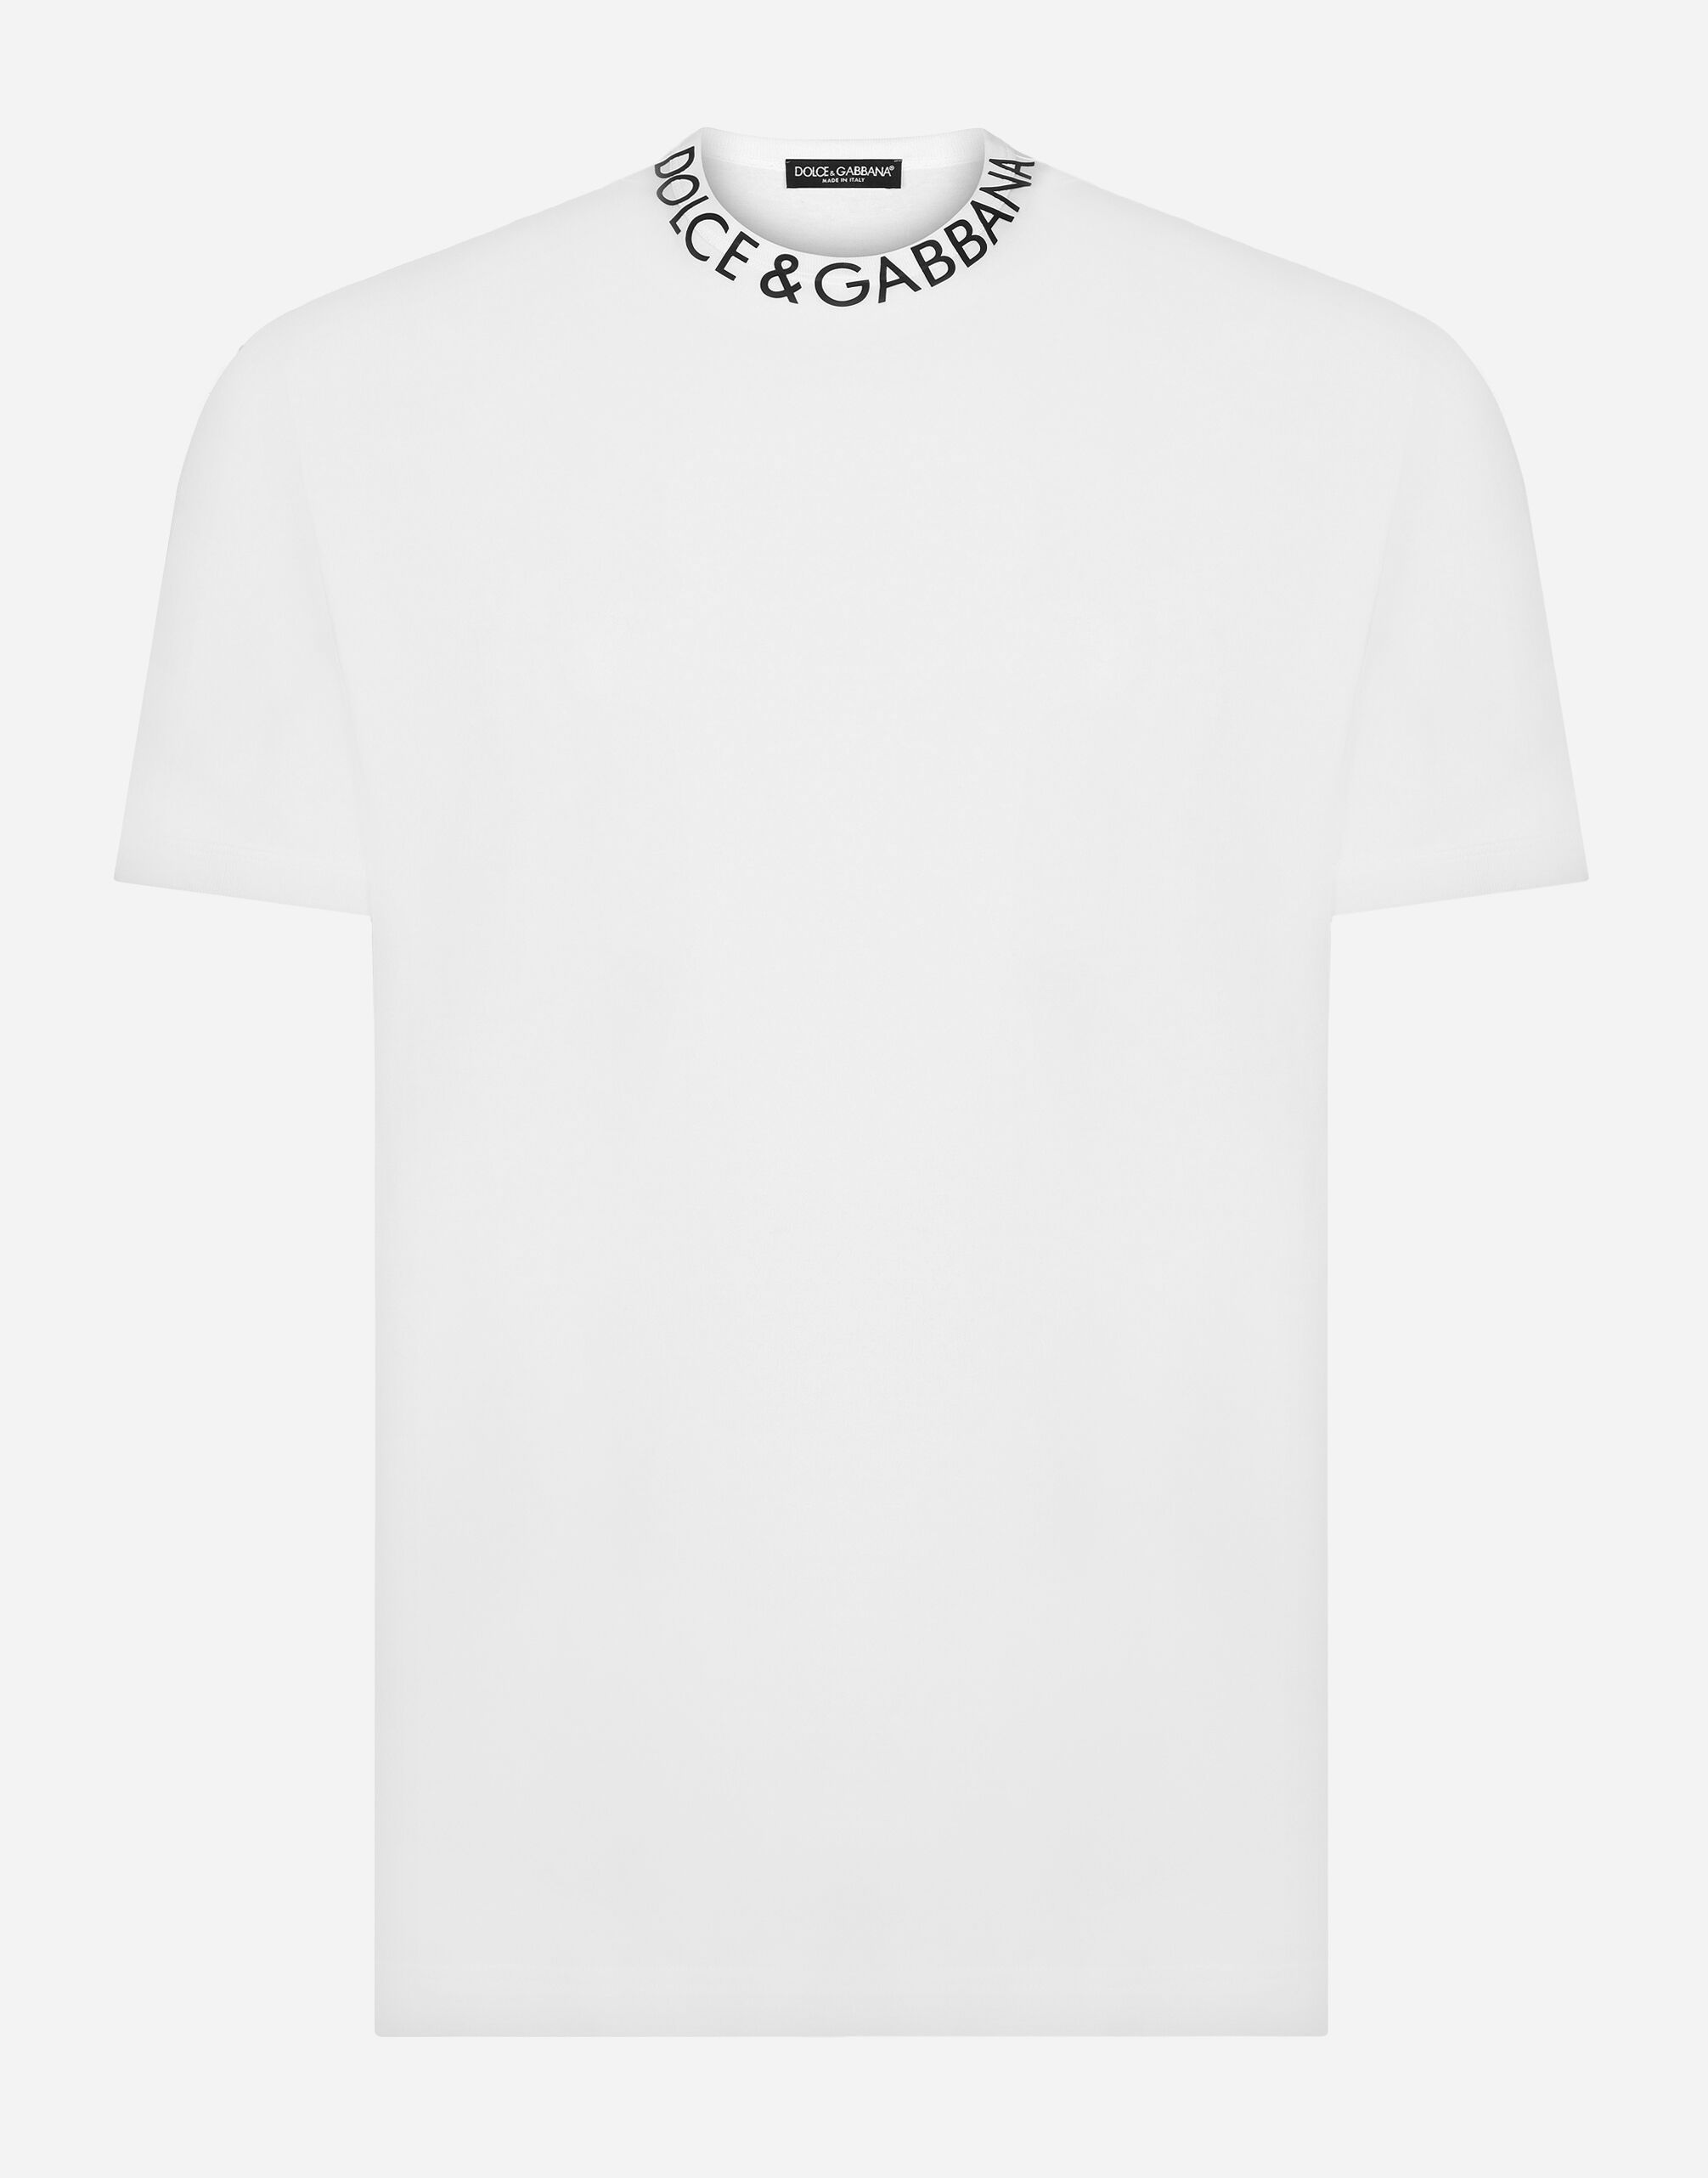 Dolce&Gabbana Round-neck T-shirt with Dolce&Gabbana print White G8PV0TG7F2I